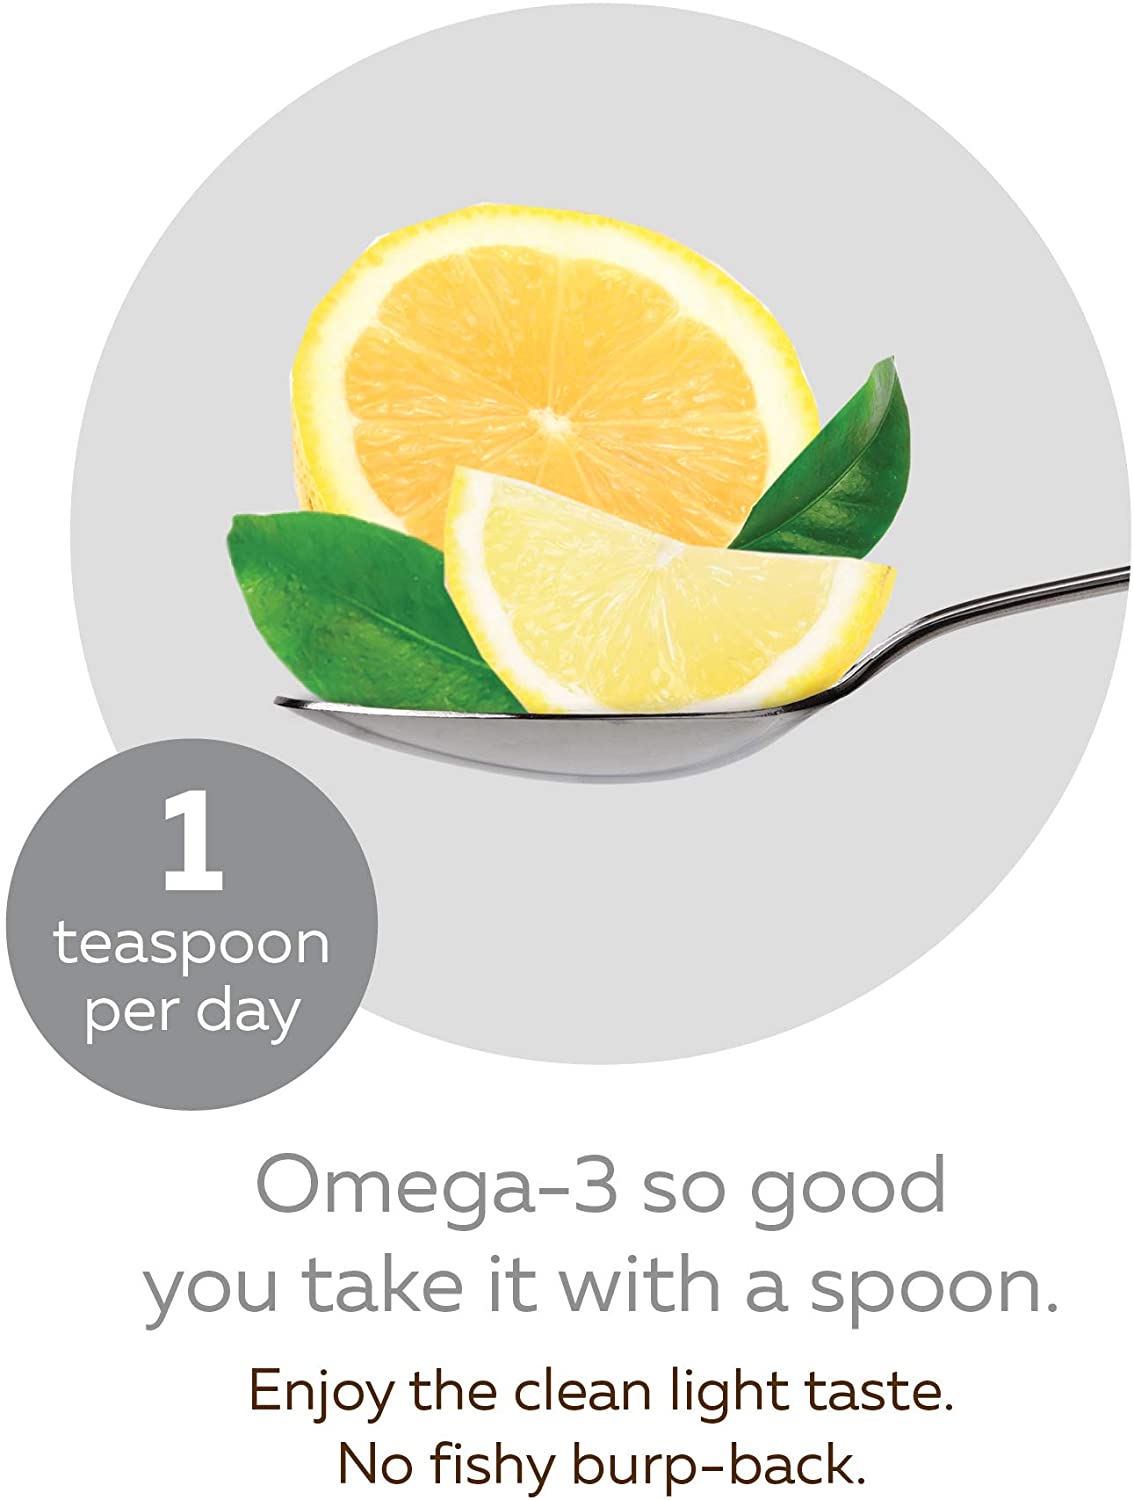 Omega-3 High EPA 500ml / Lemon